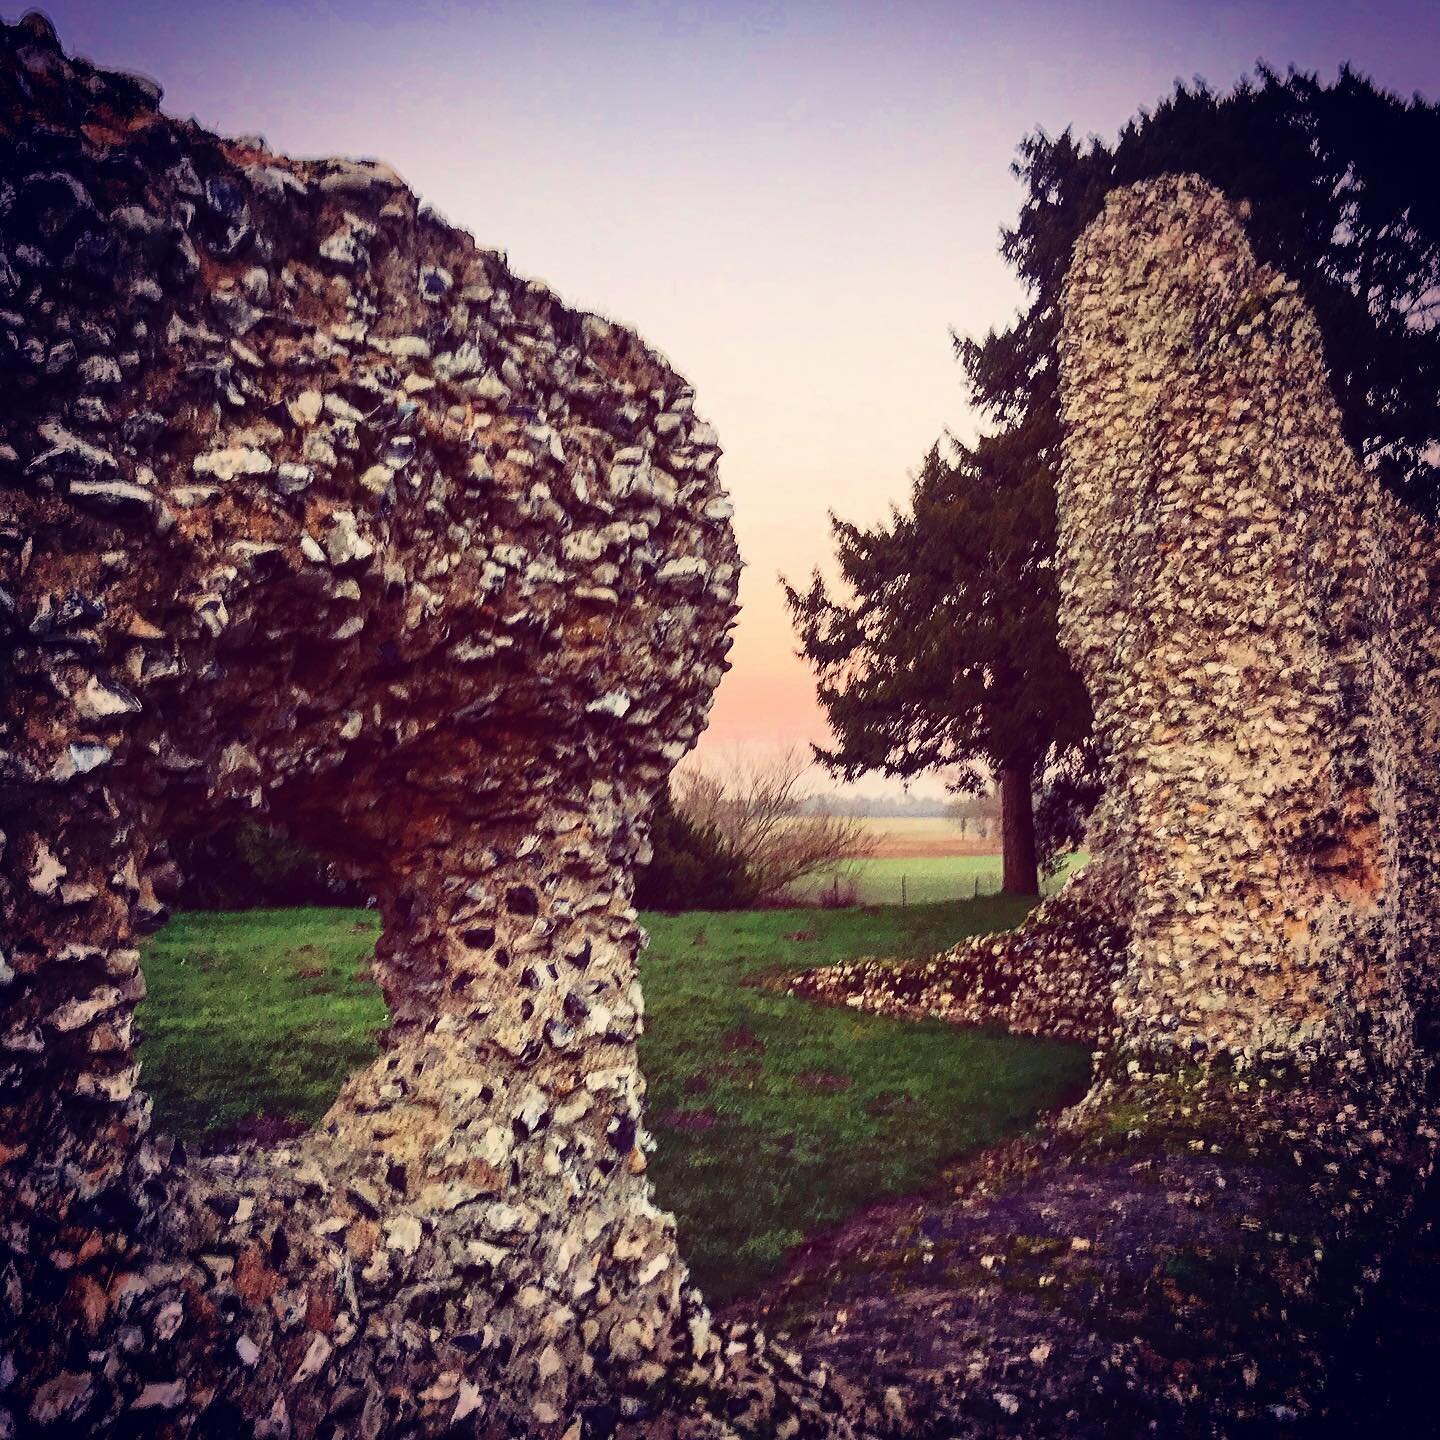 Misty evening walk

#castle #norfolk #walk #sunset #history #ruins